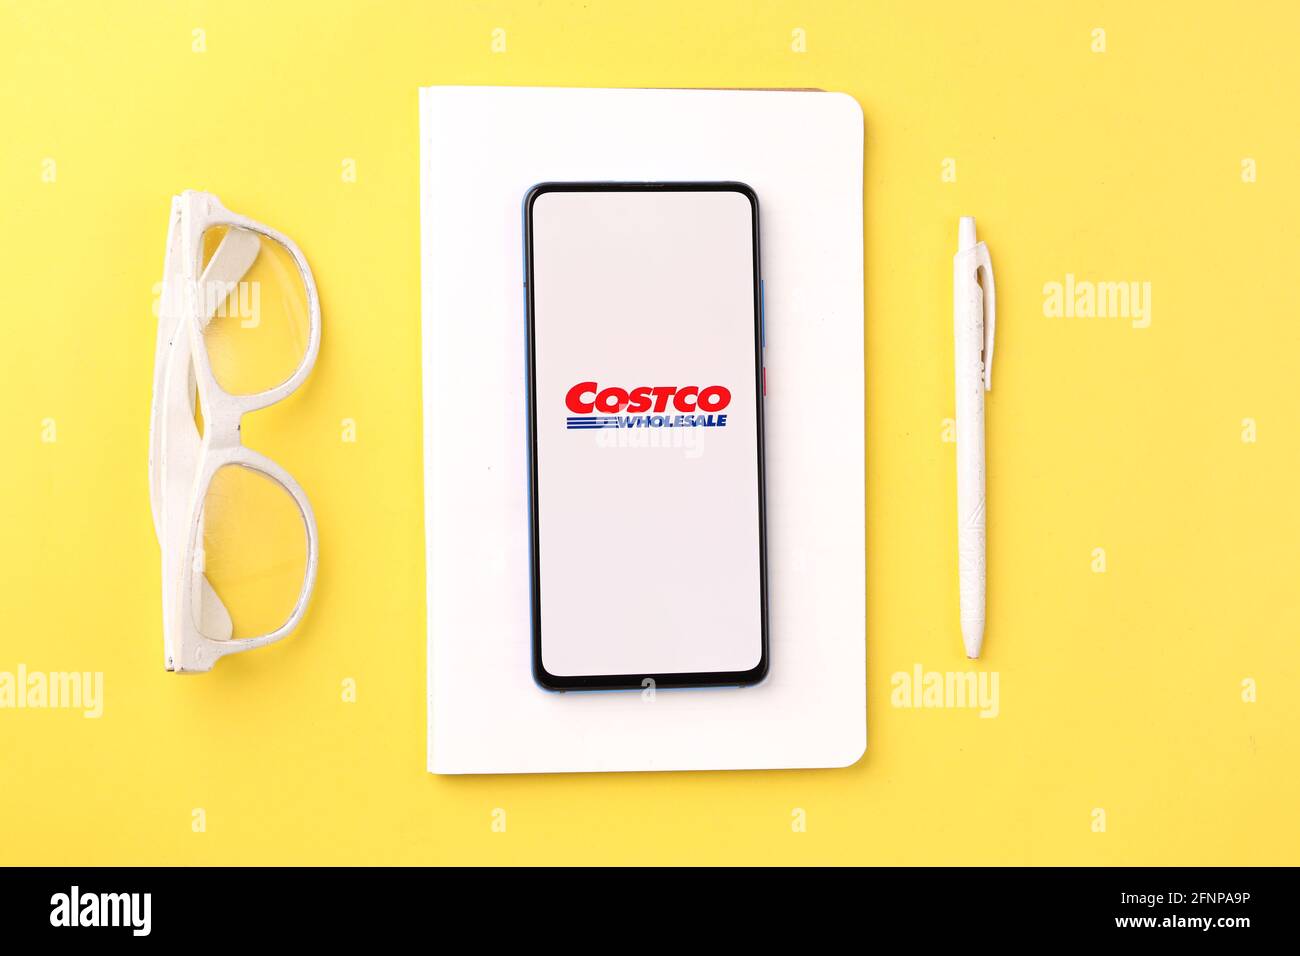 Assam, india - May 18, 2021 : Costco logo on phone screen stock image. Stock Photo